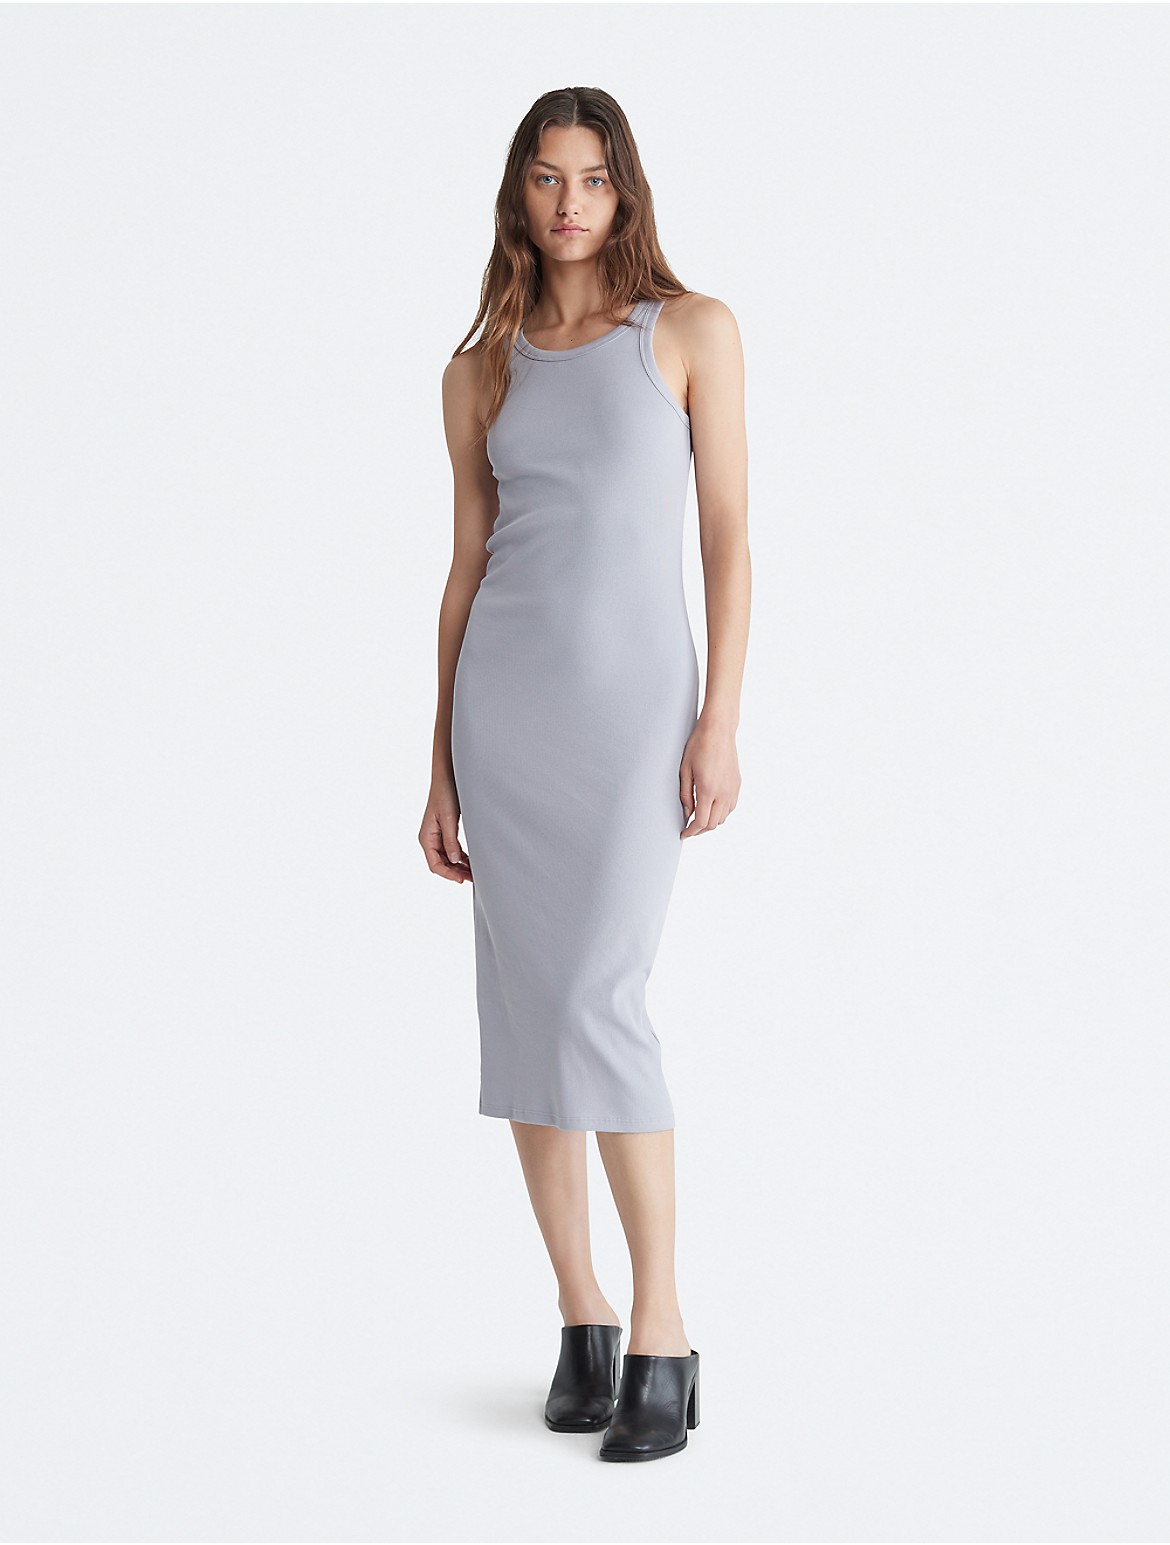 Calvin Klein Women's Cotton Contour Rib Tank Dress - Grey - XS